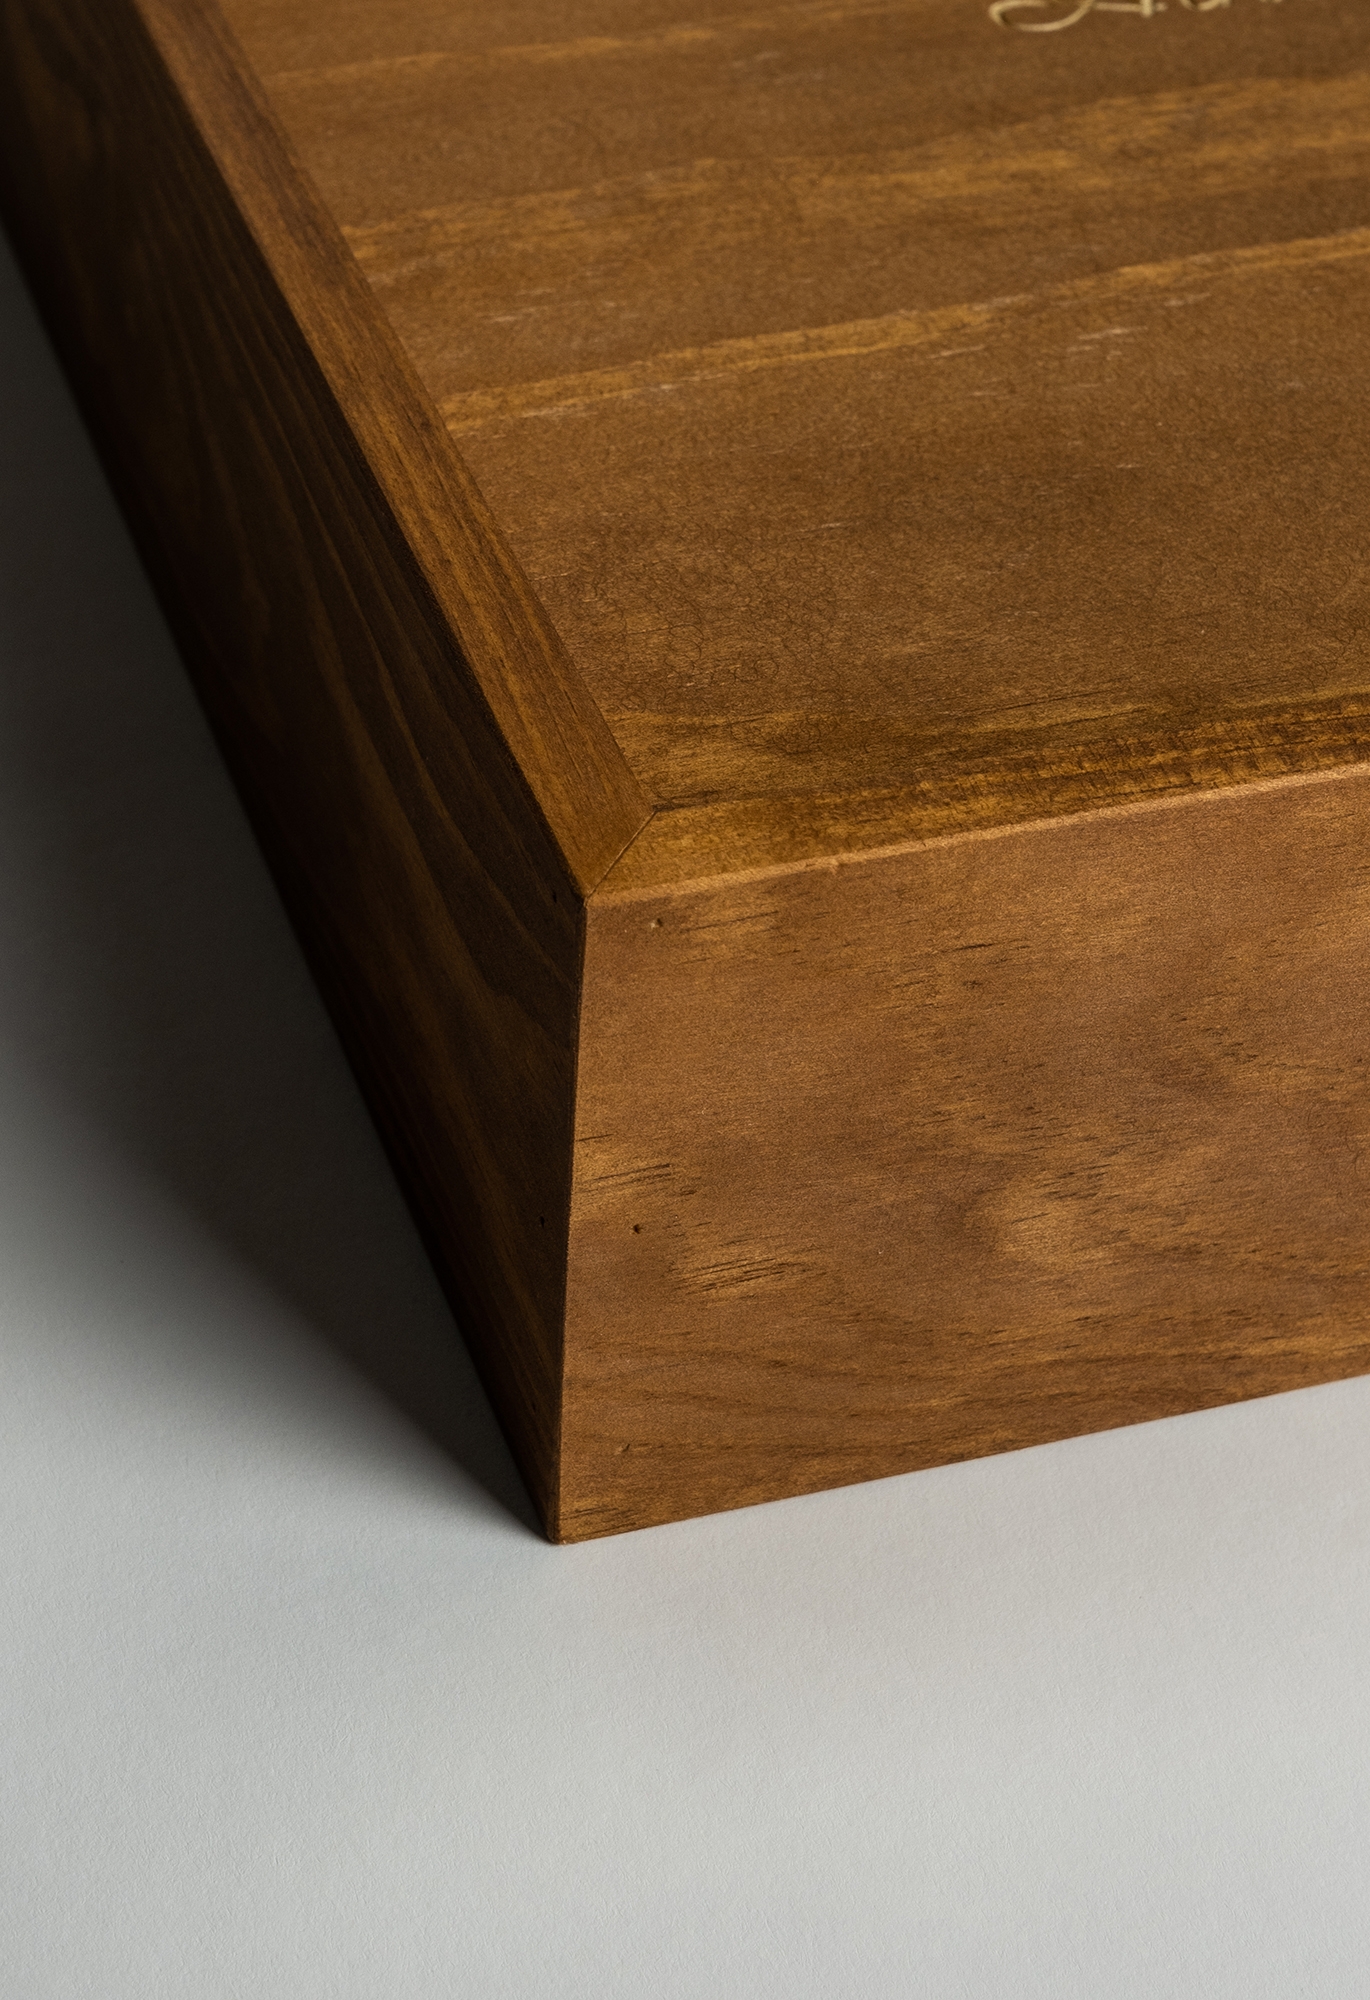 Wood Box Konstruktive Details 1